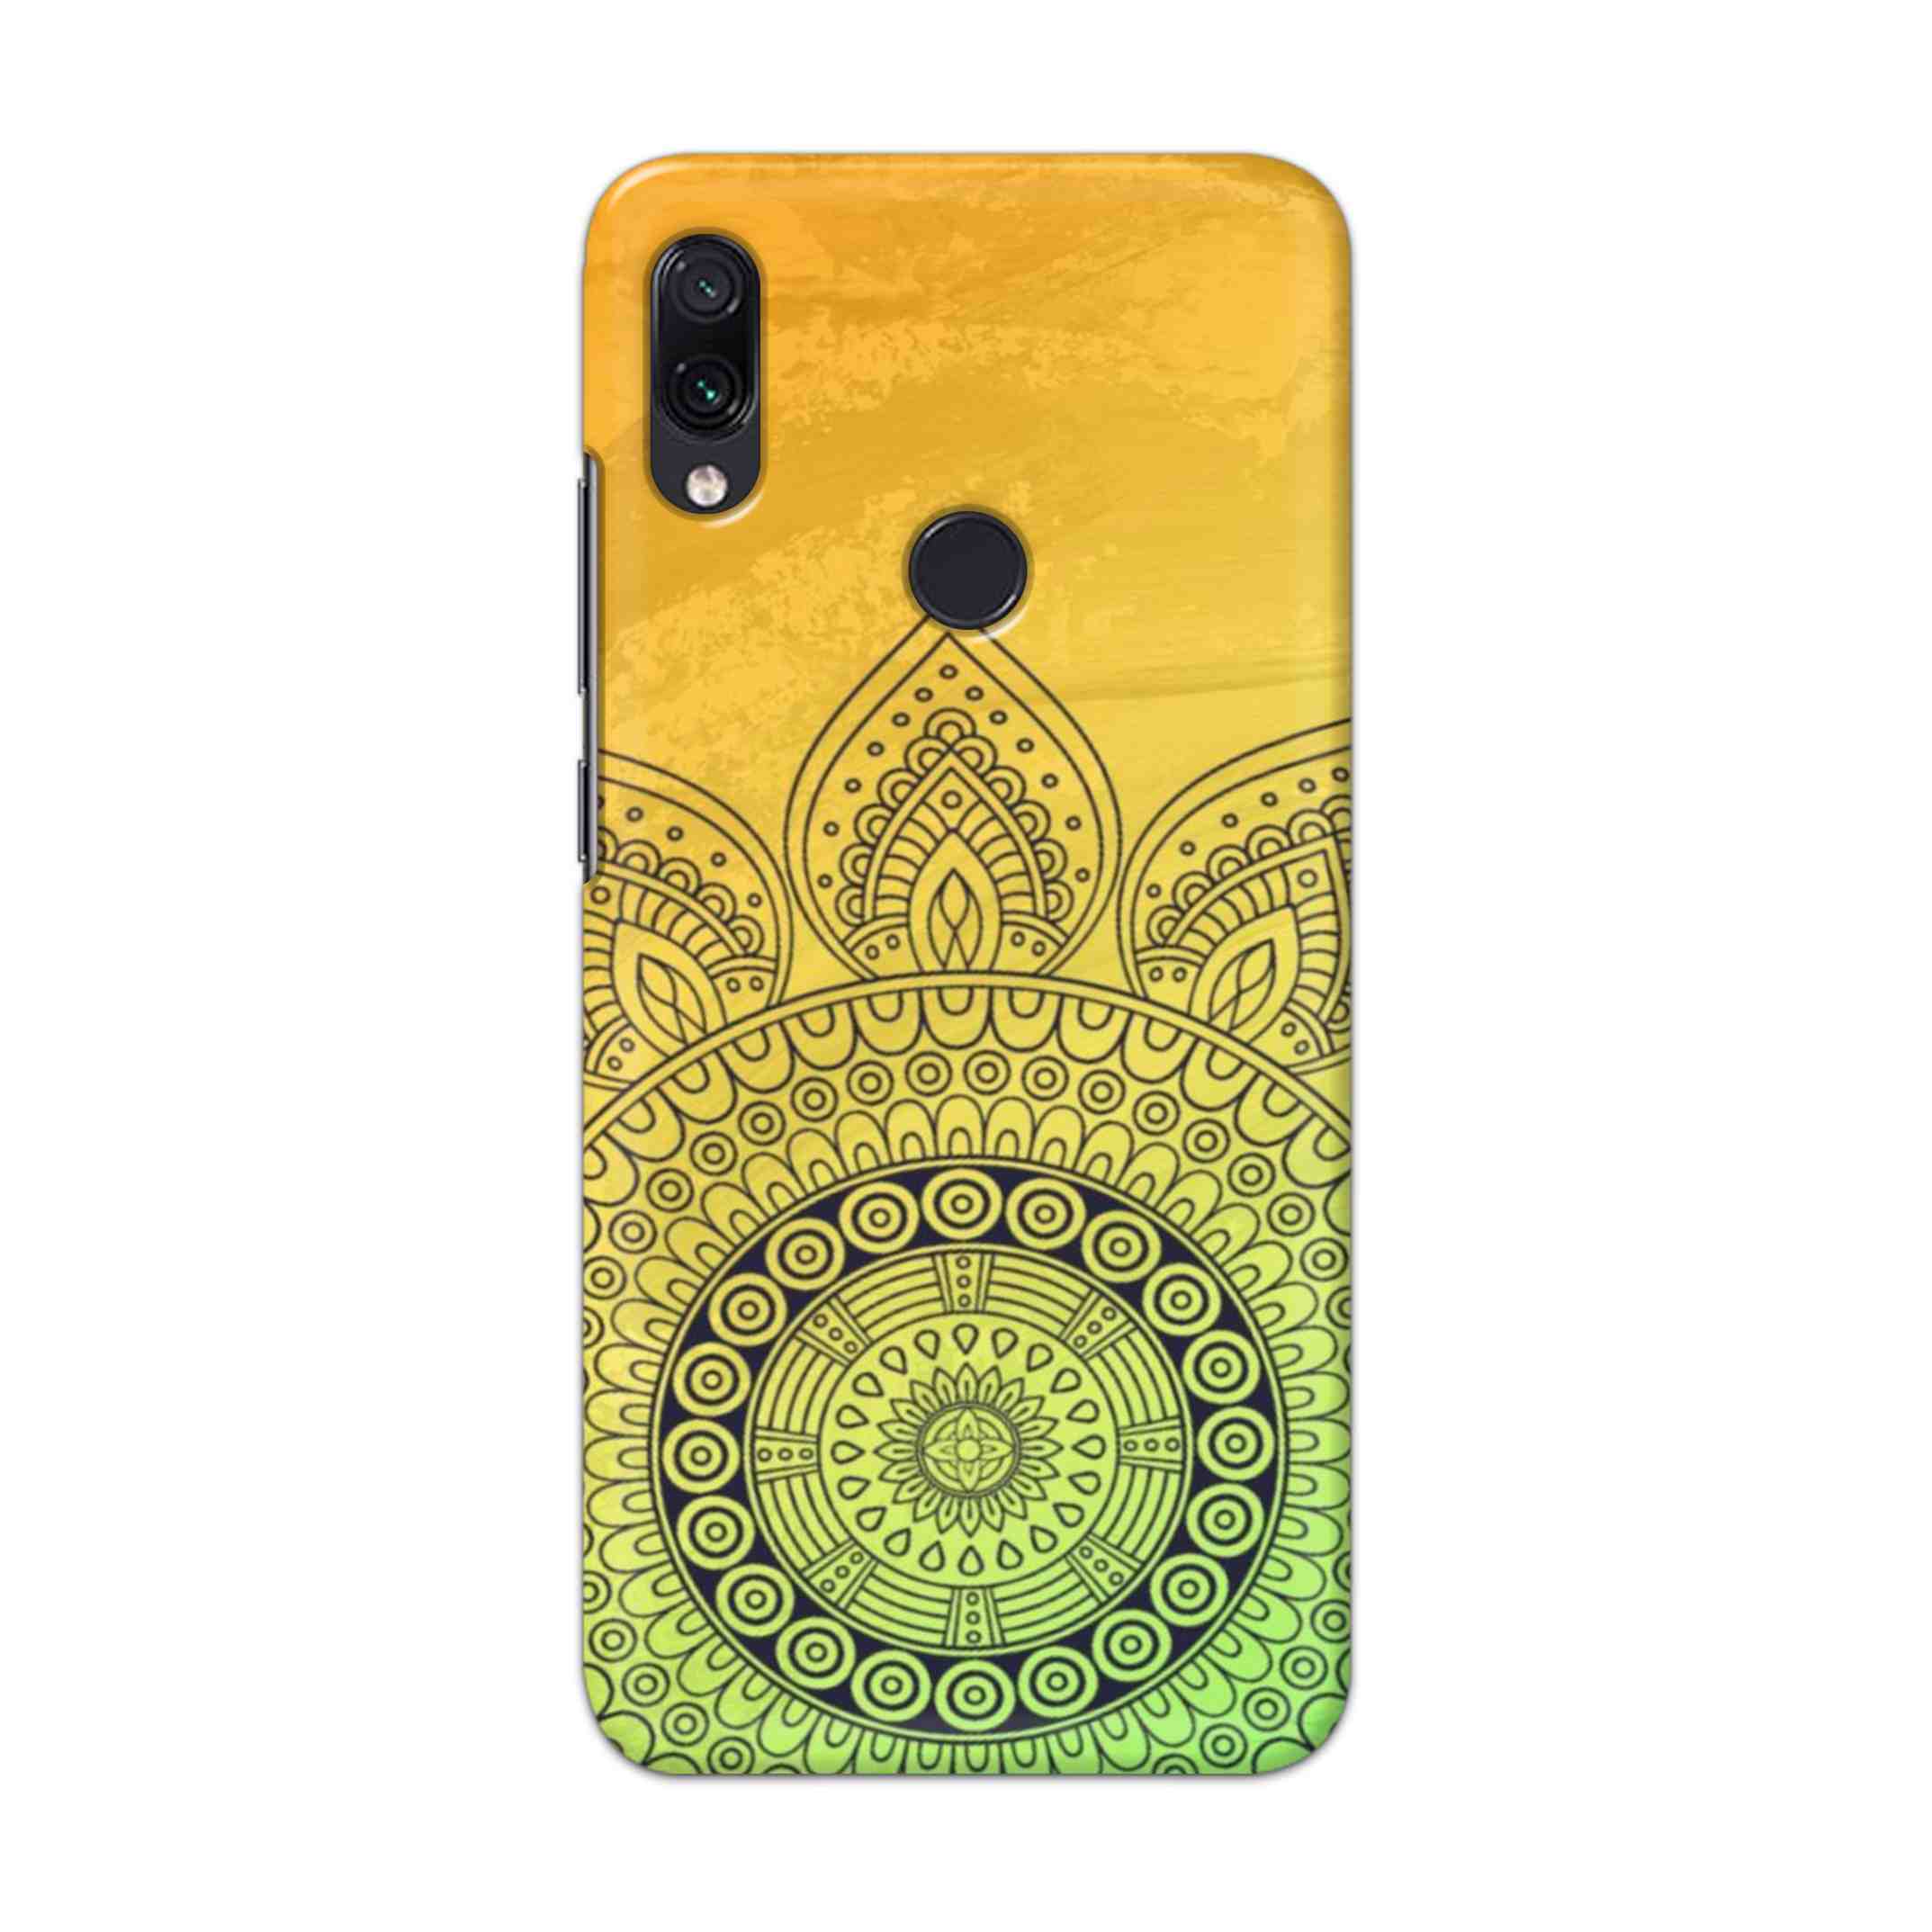 Buy Yellow Rangoli Hard Back Mobile Phone Case Cover For Xiaomi Redmi 7 Online